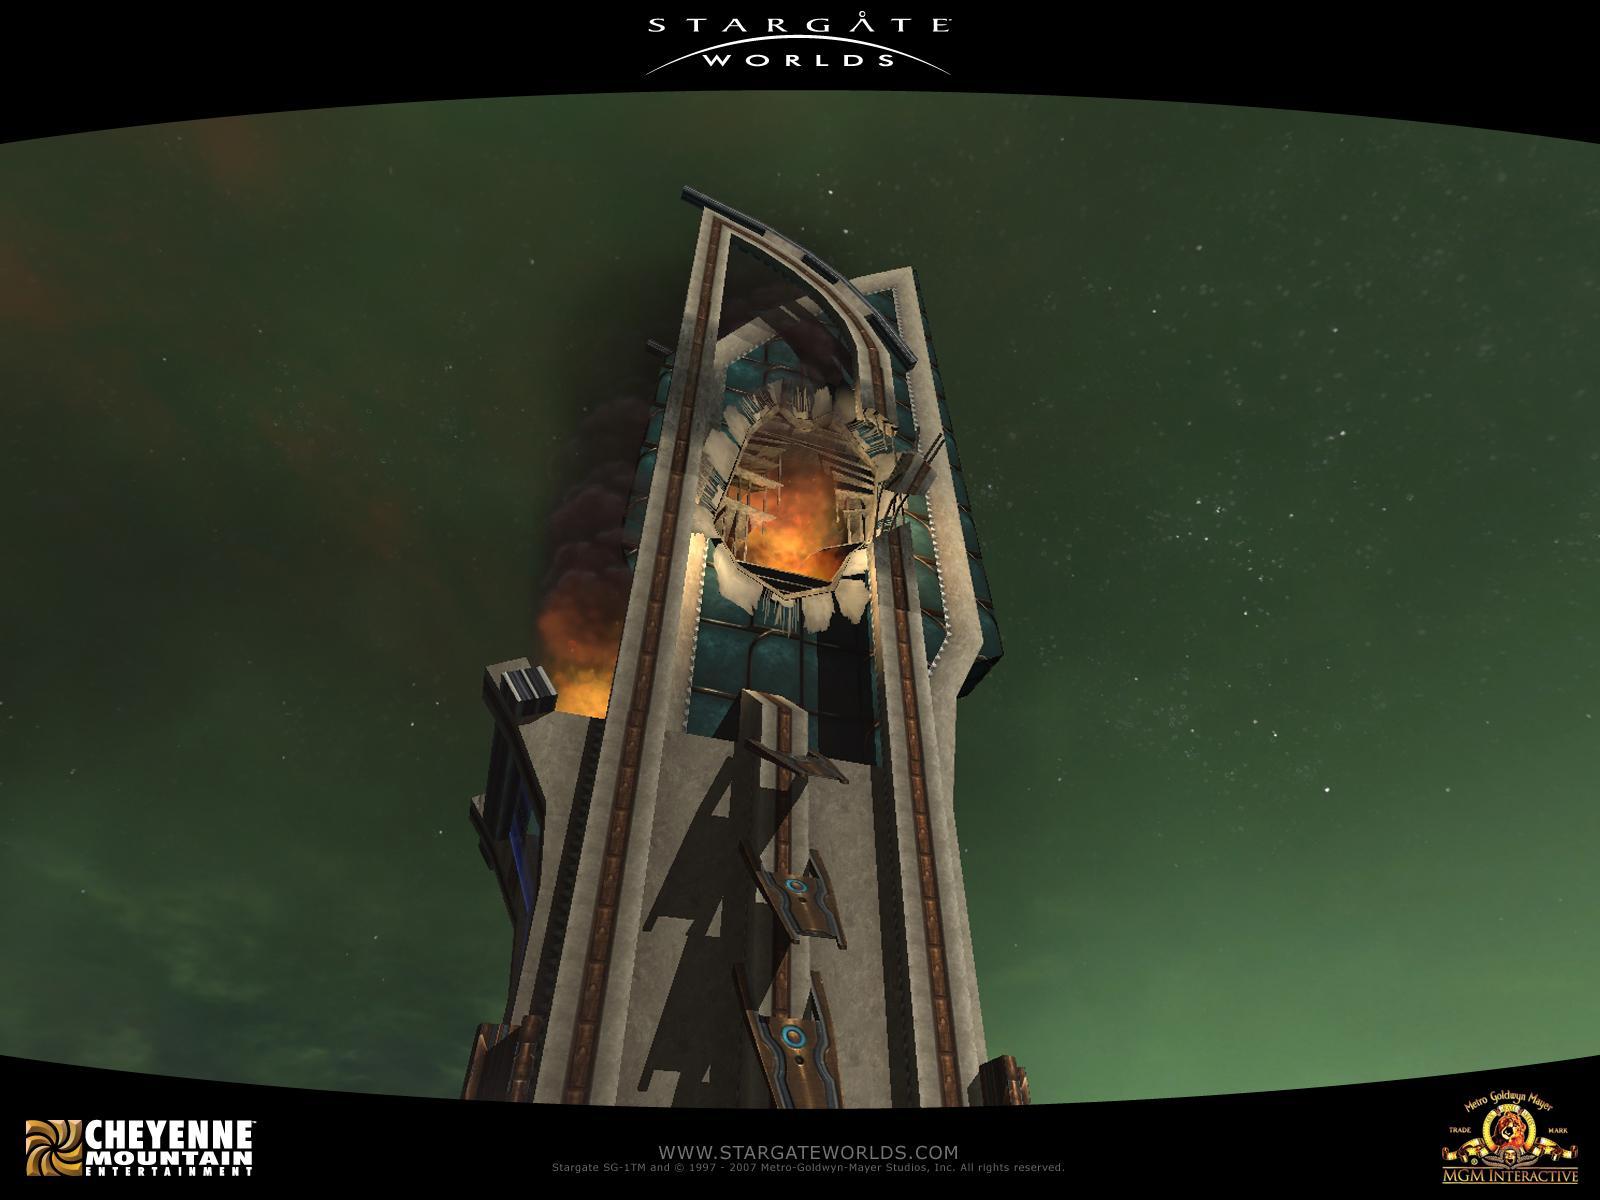 Stargate Worlds #16